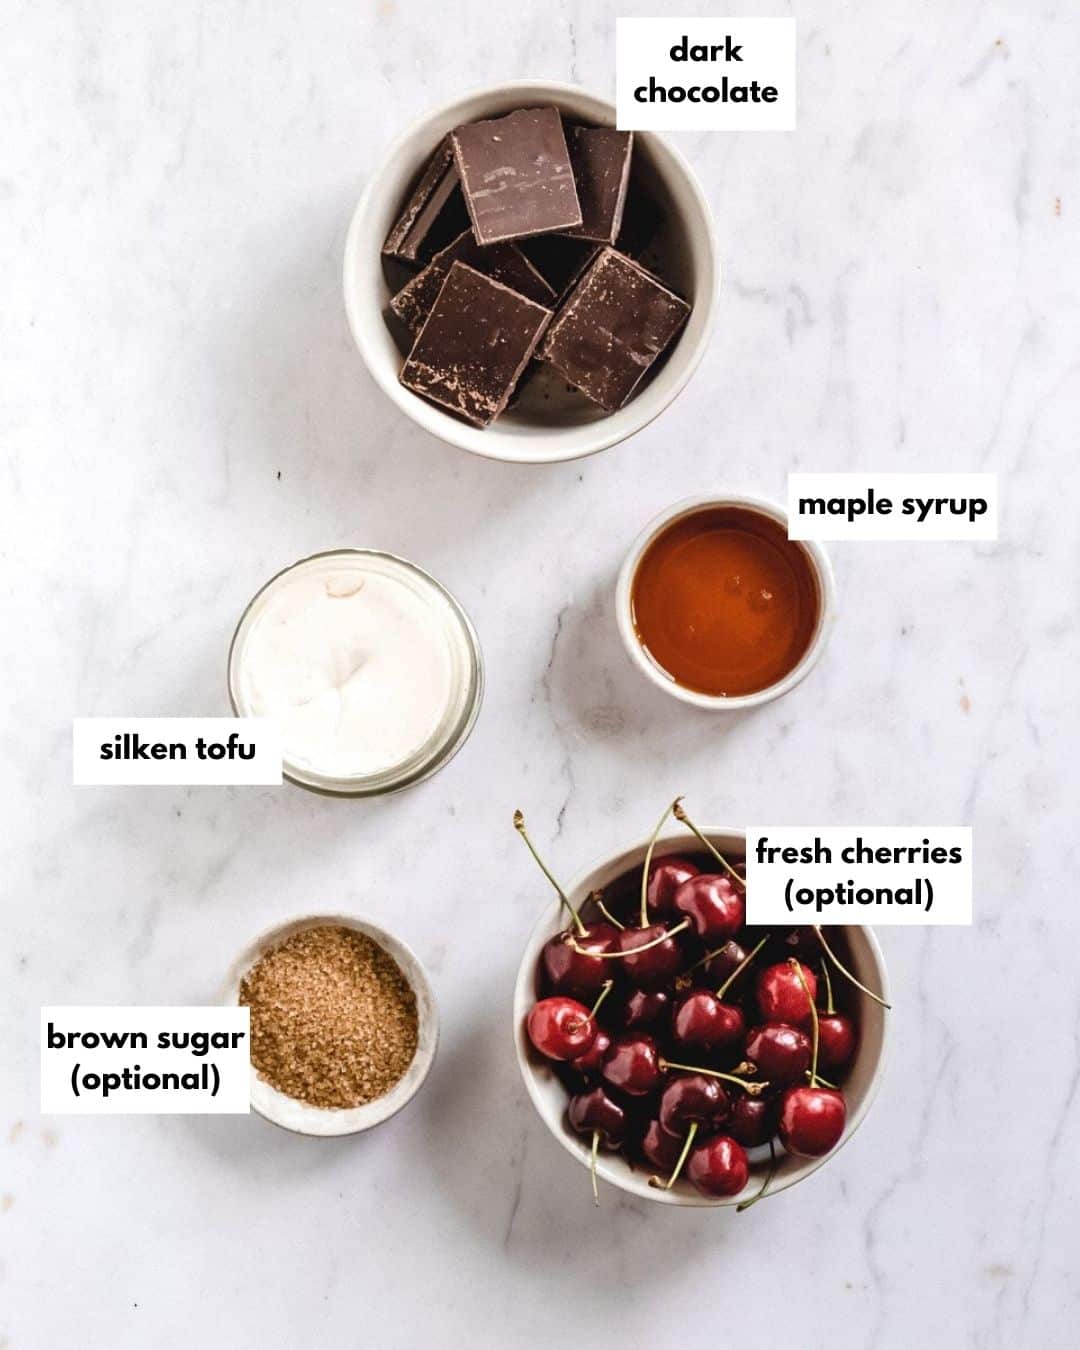 all ingredients needed for chocolate cherry dessert: dark chocolate, maple yrup, silken tofu, bworn sugar, fresh cherries.